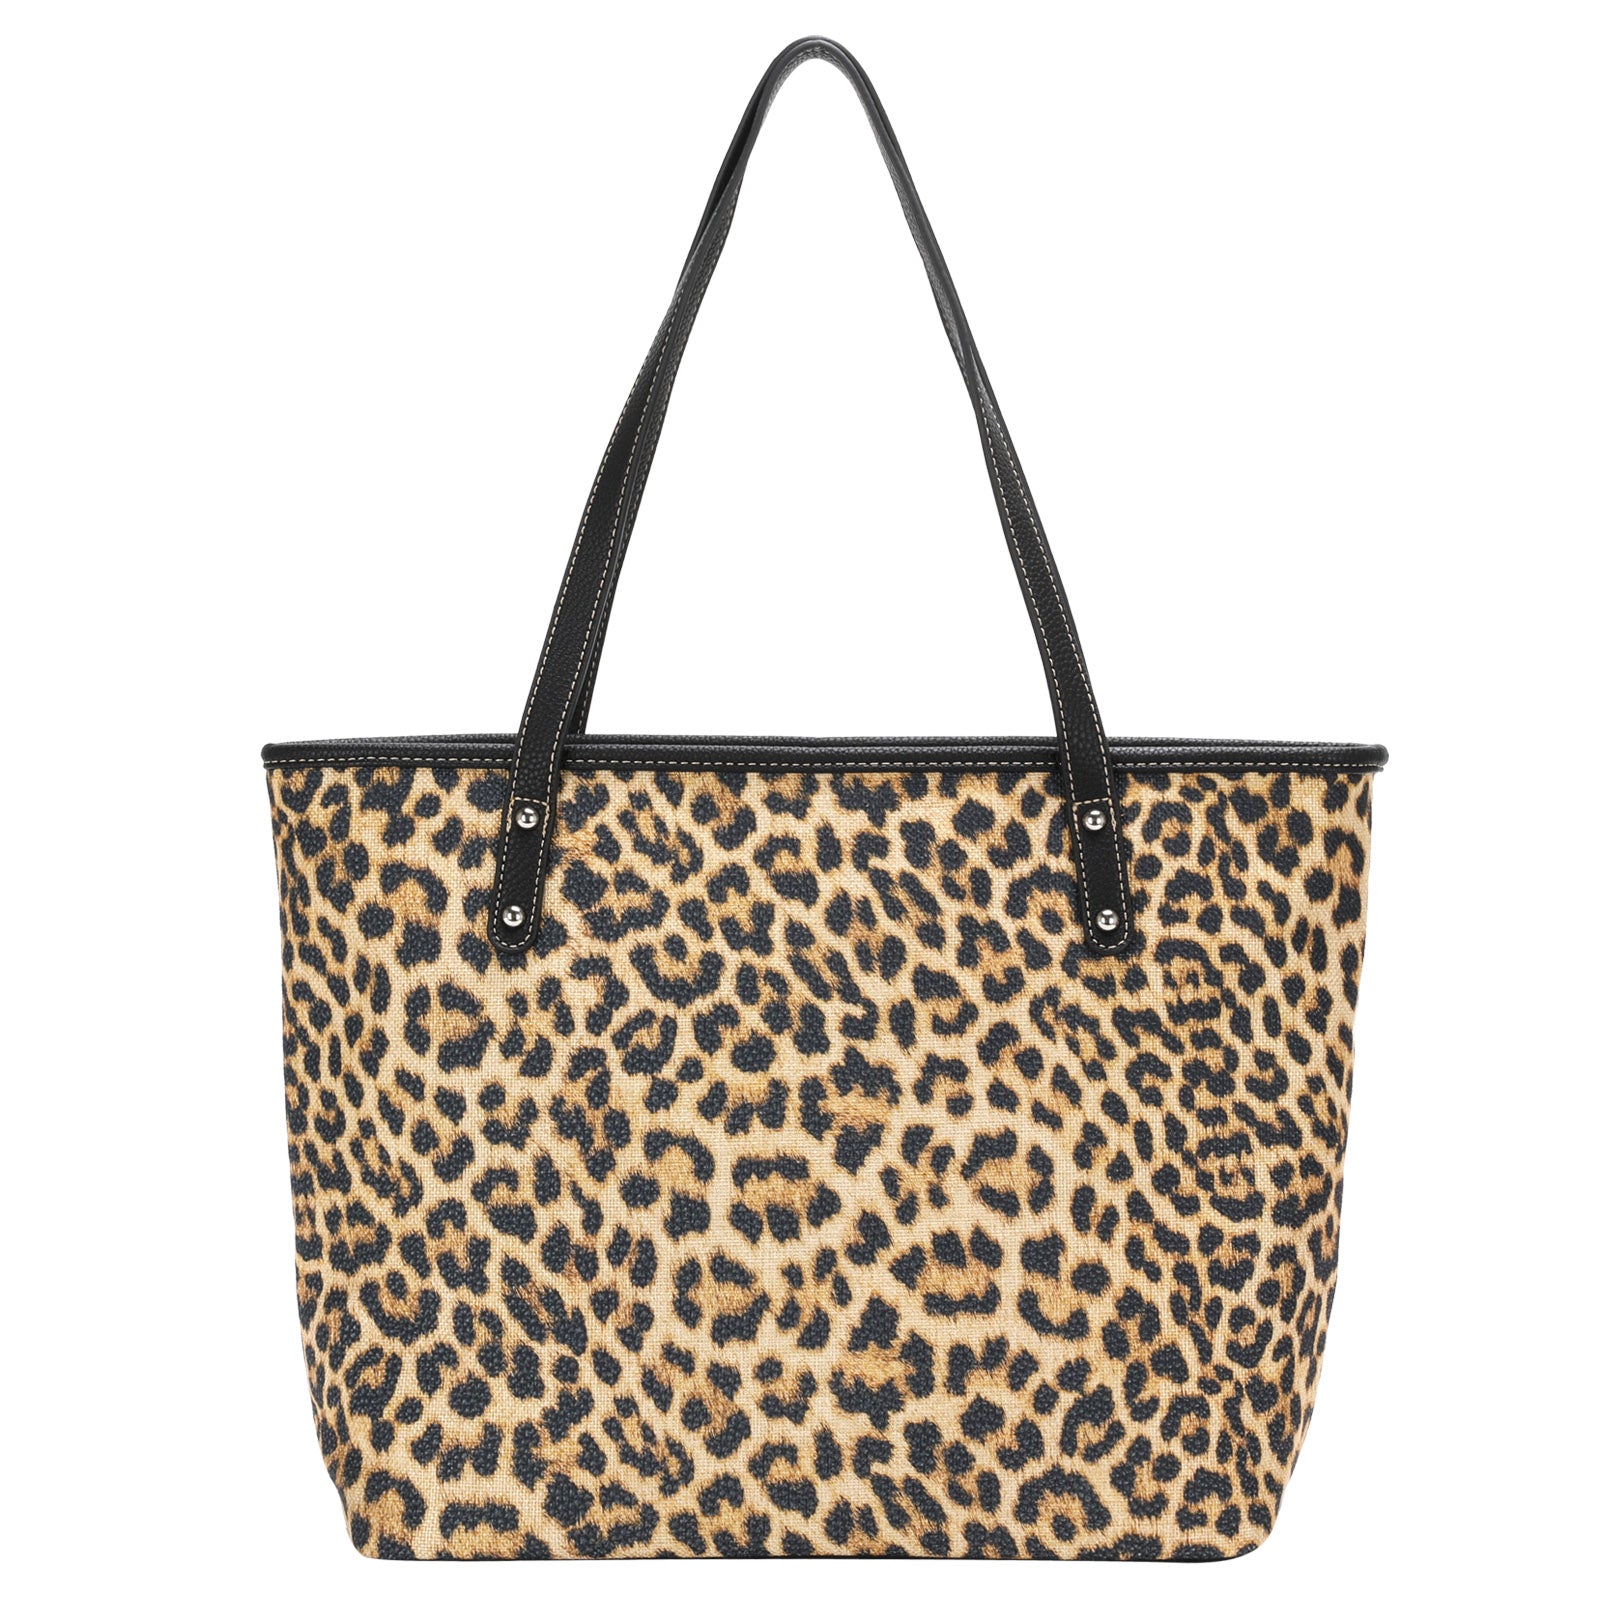 leopard bag